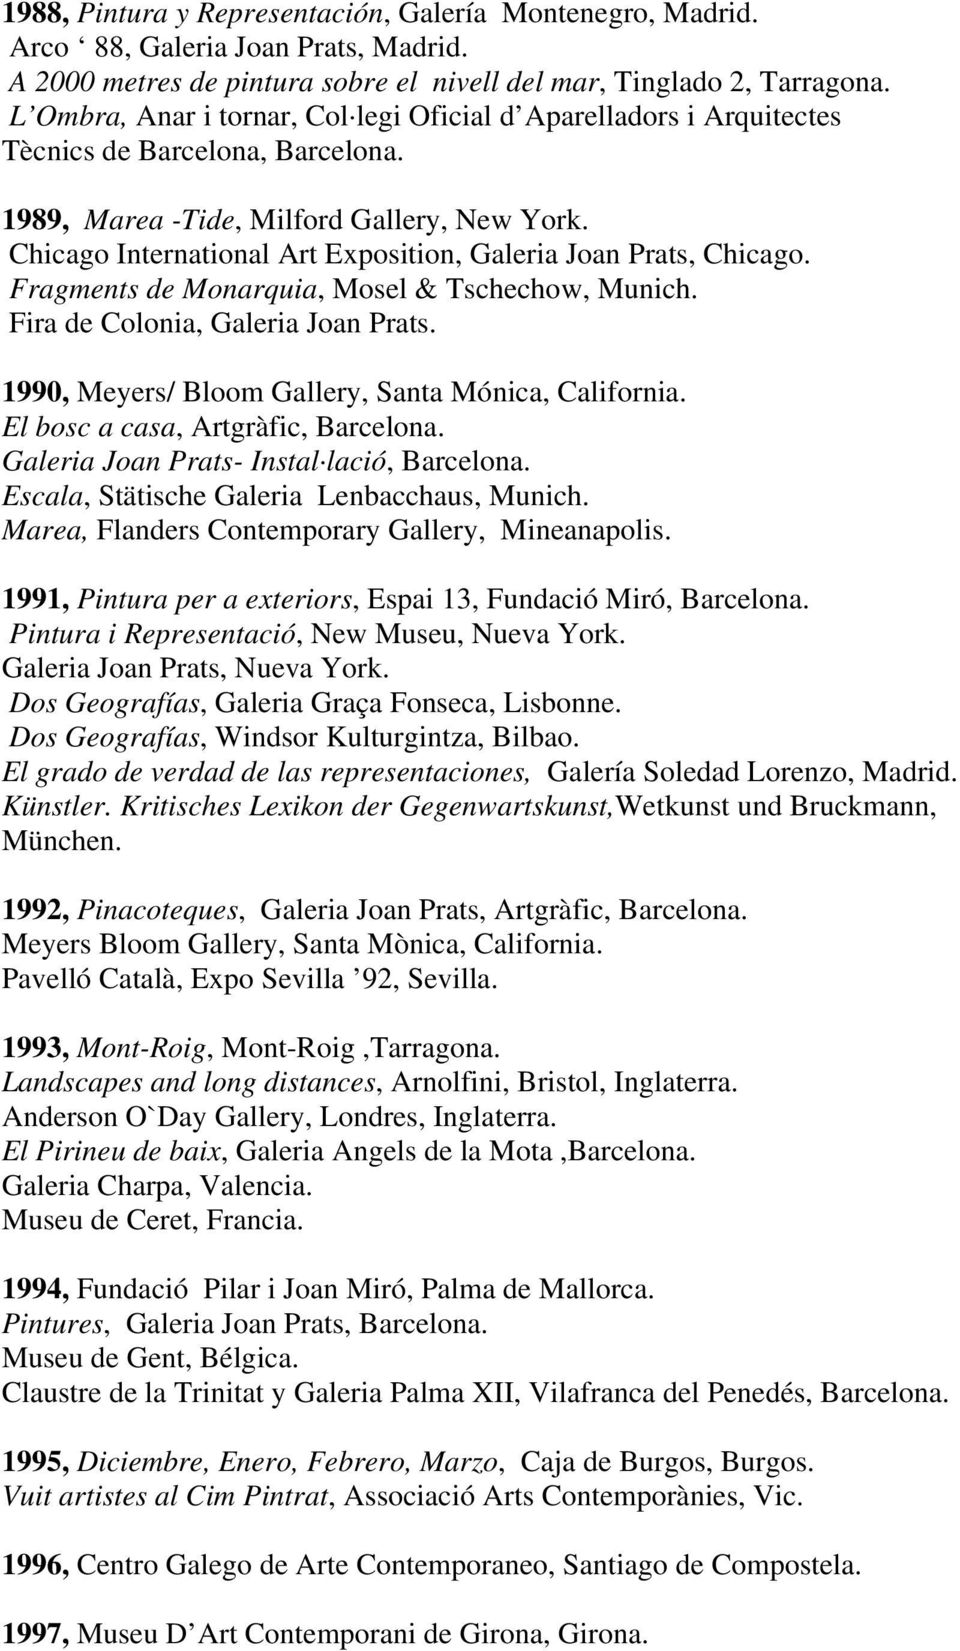 Chicago International Art Exposition, Galeria Joan Prats, Chicago. Fragments de Monarquia, Mosel & Tschechow, Munich. Fira de Colonia, Galeria Joan Prats.